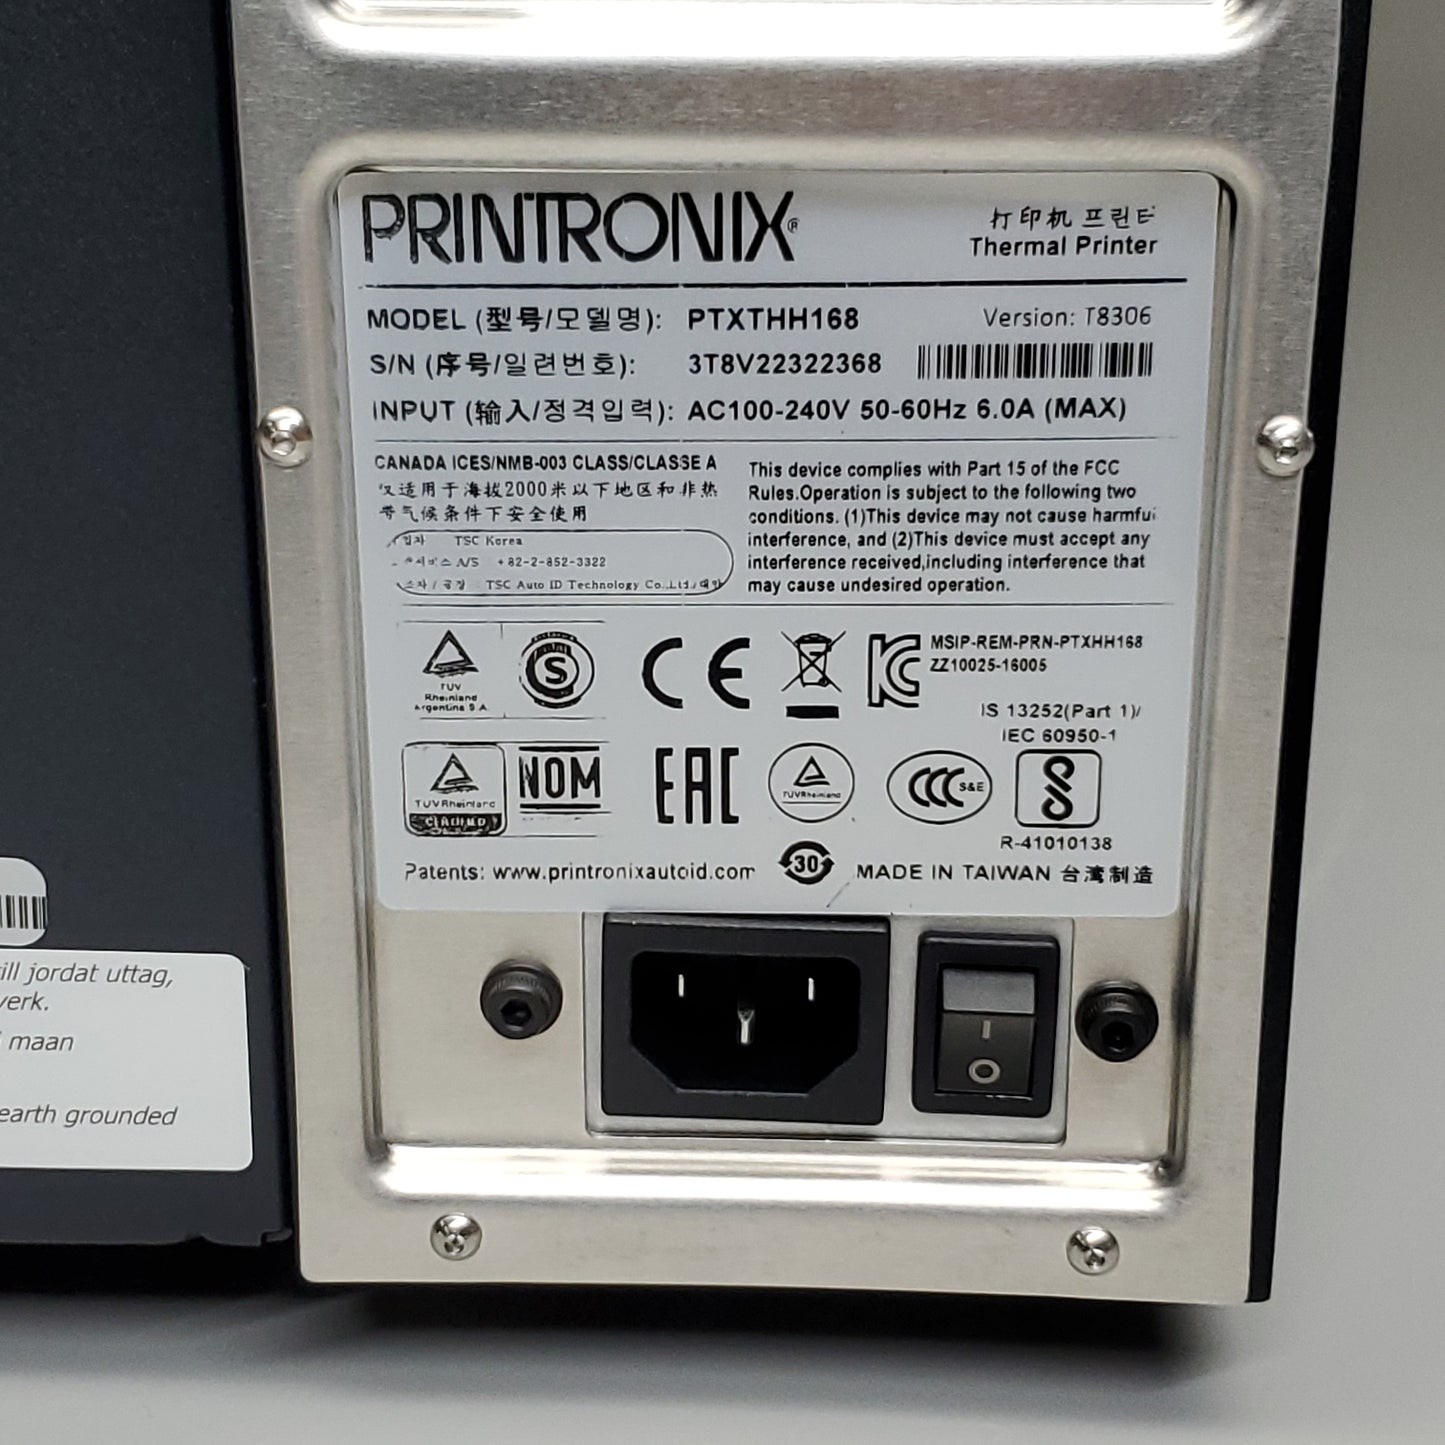 TSC PRINTRONIX Auto ID Barcode Label Printer PTXTHH168 T83N6-1100-0 (New)